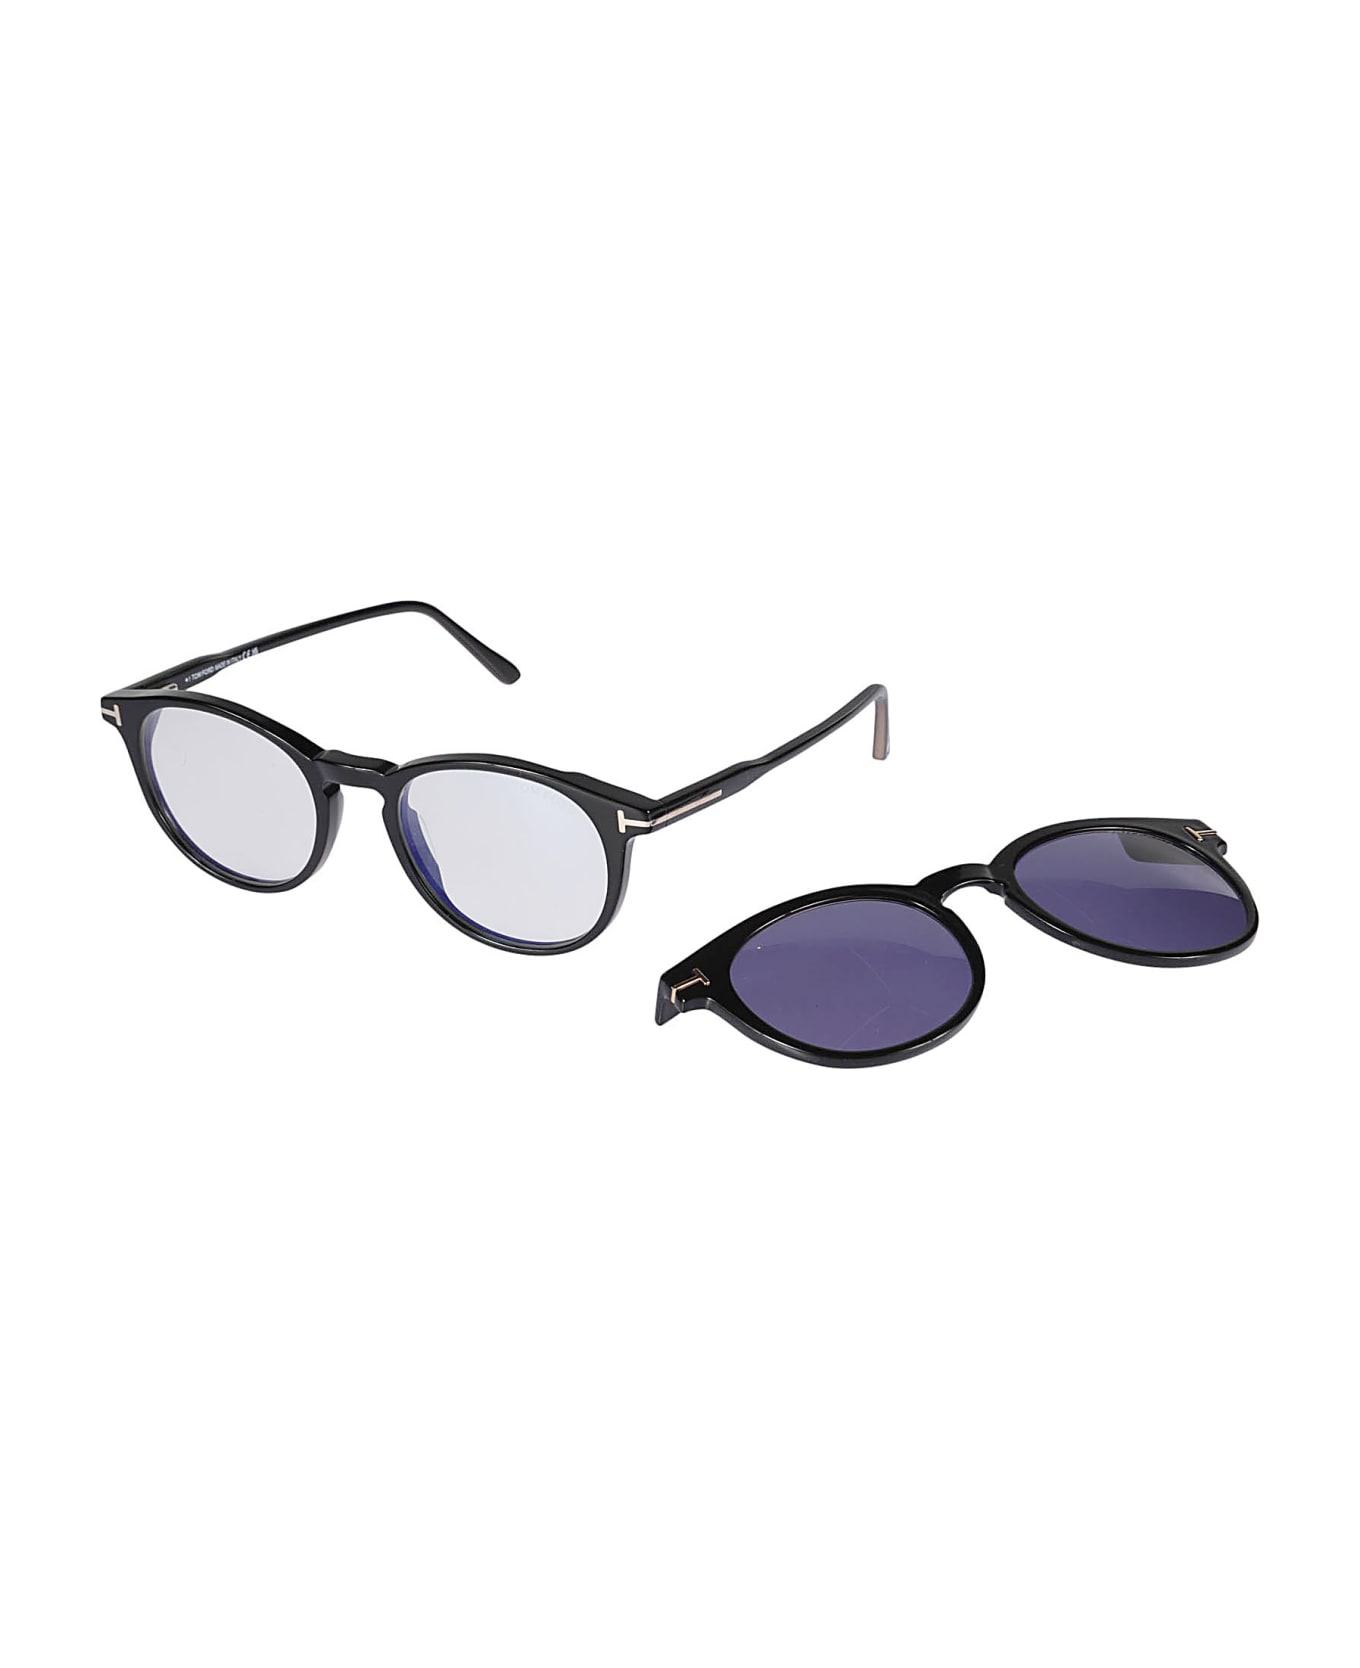 Tom Ford Eyewear Classic Round Lens Sunglasses - 001